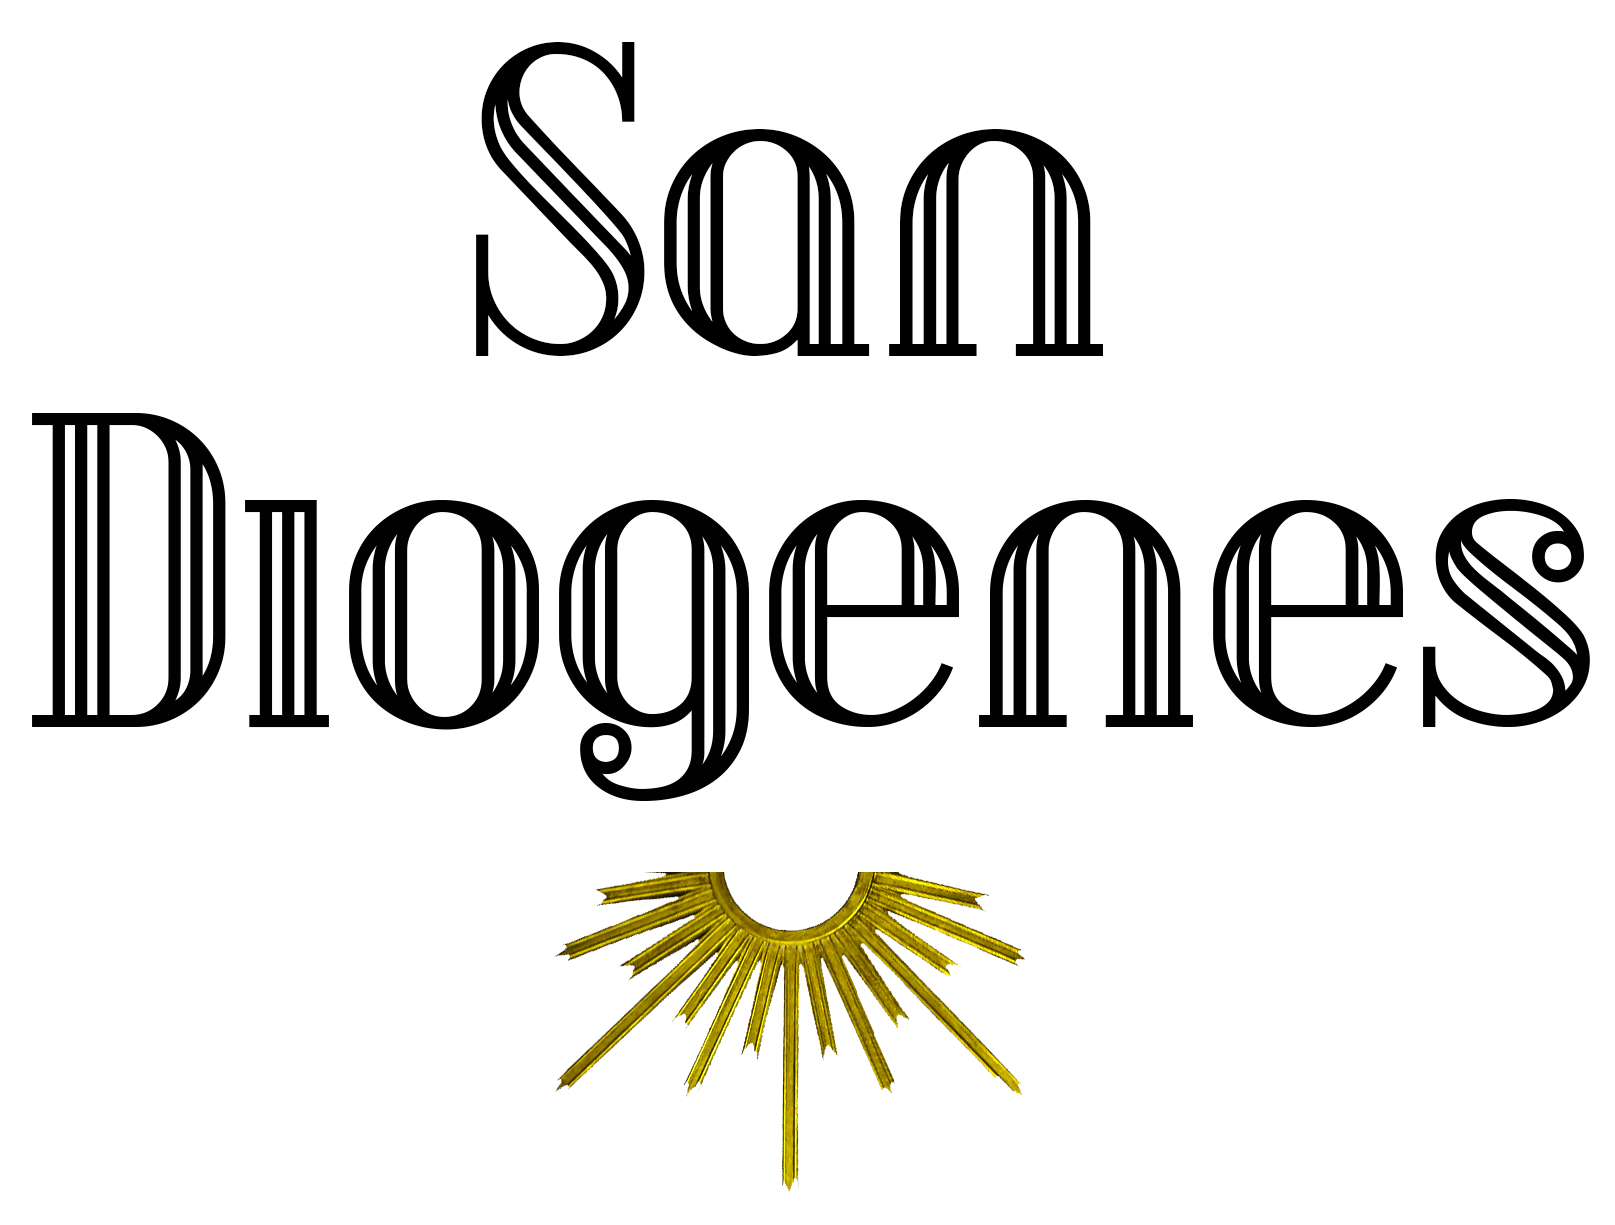 San Diogenes